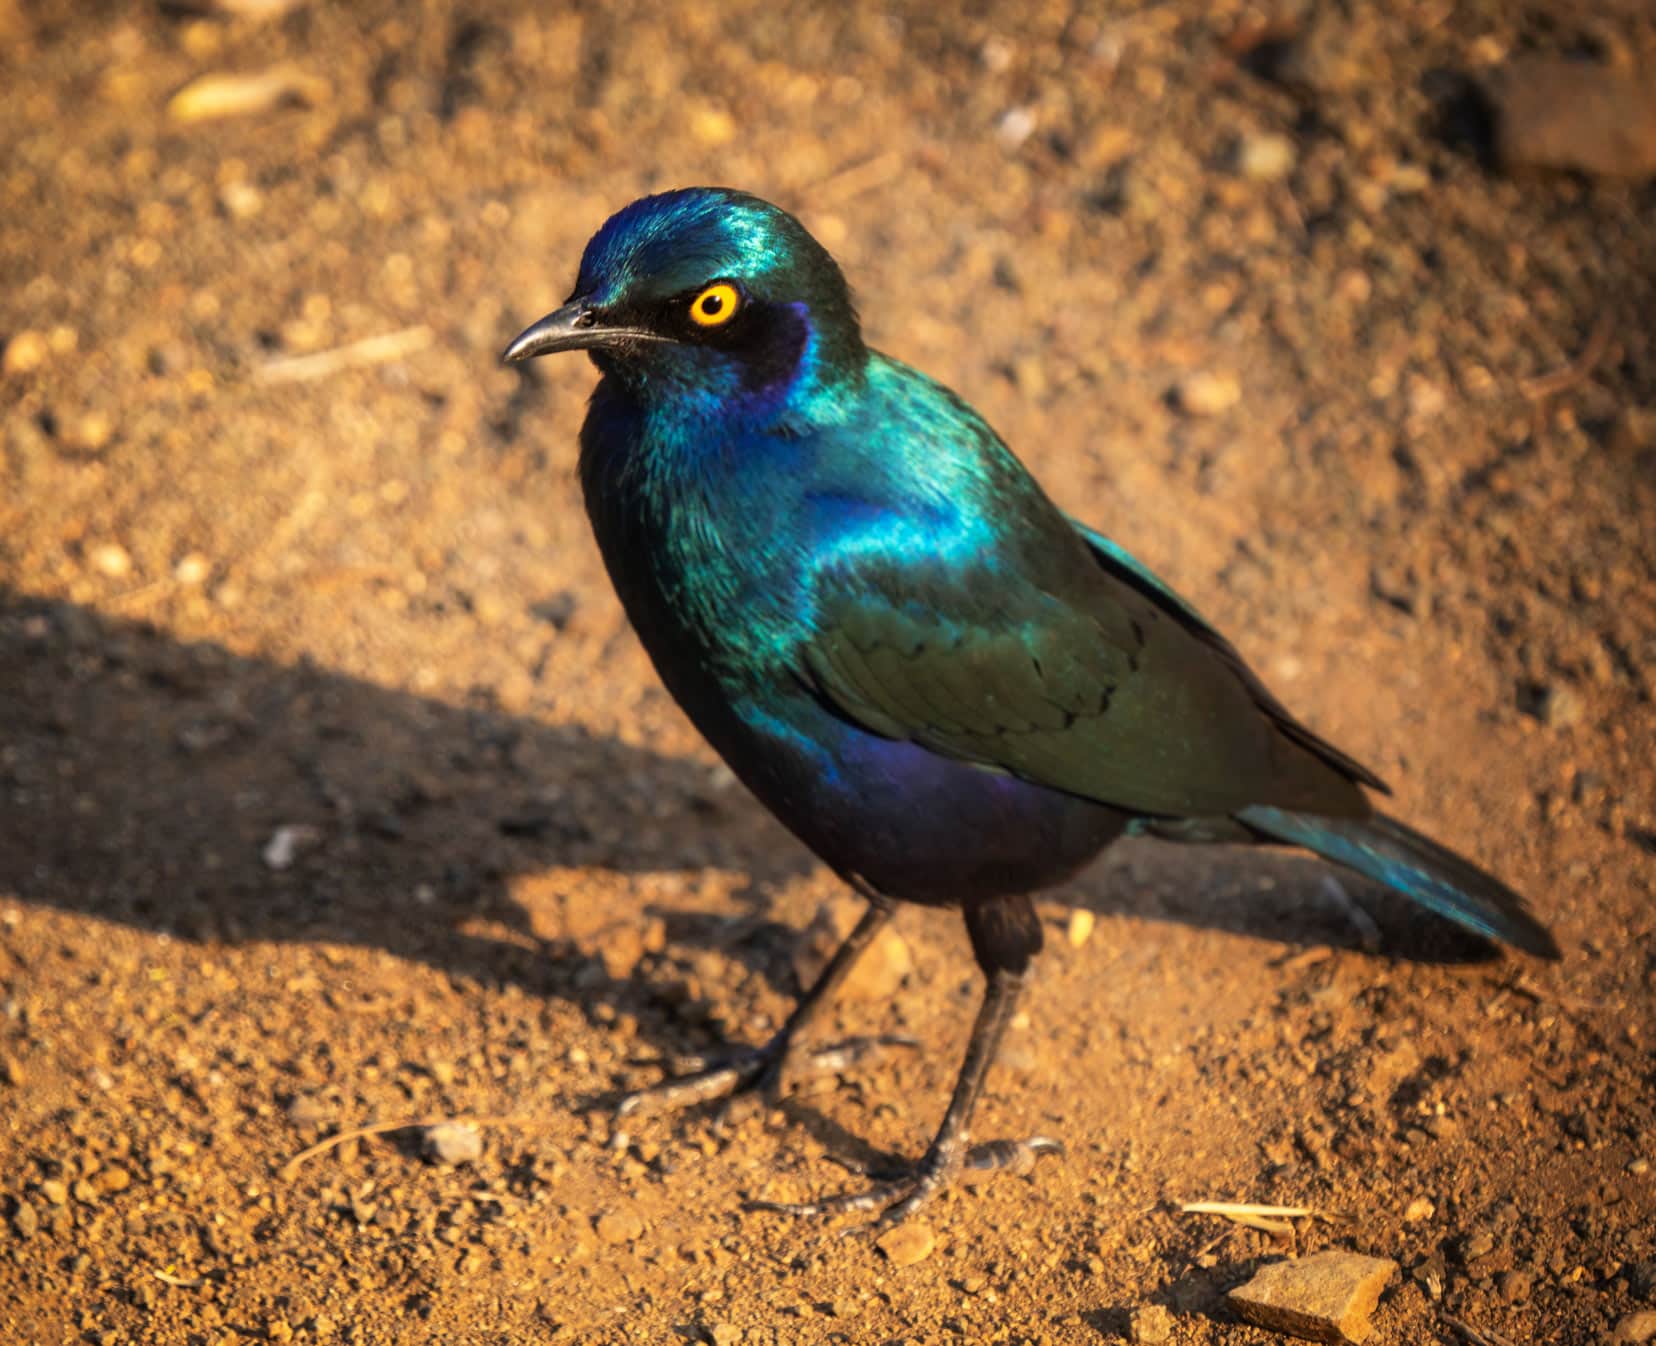 Blue green bird with yellow eye stood on sand